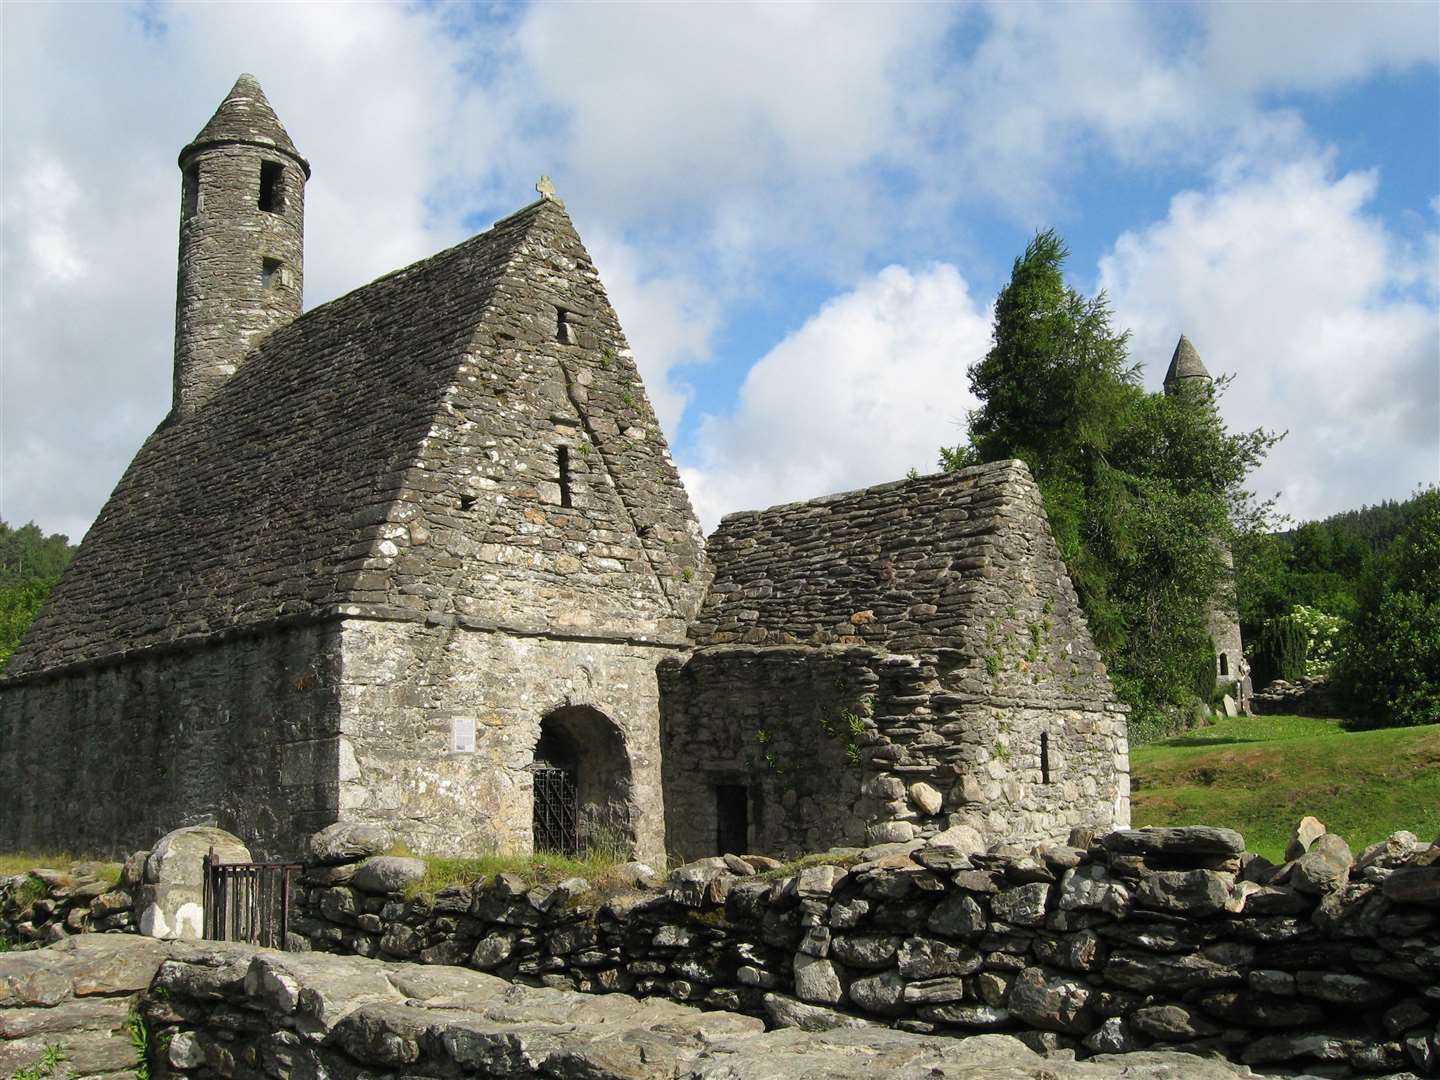 St. Kevin's Church in Glendalough, Ireland.